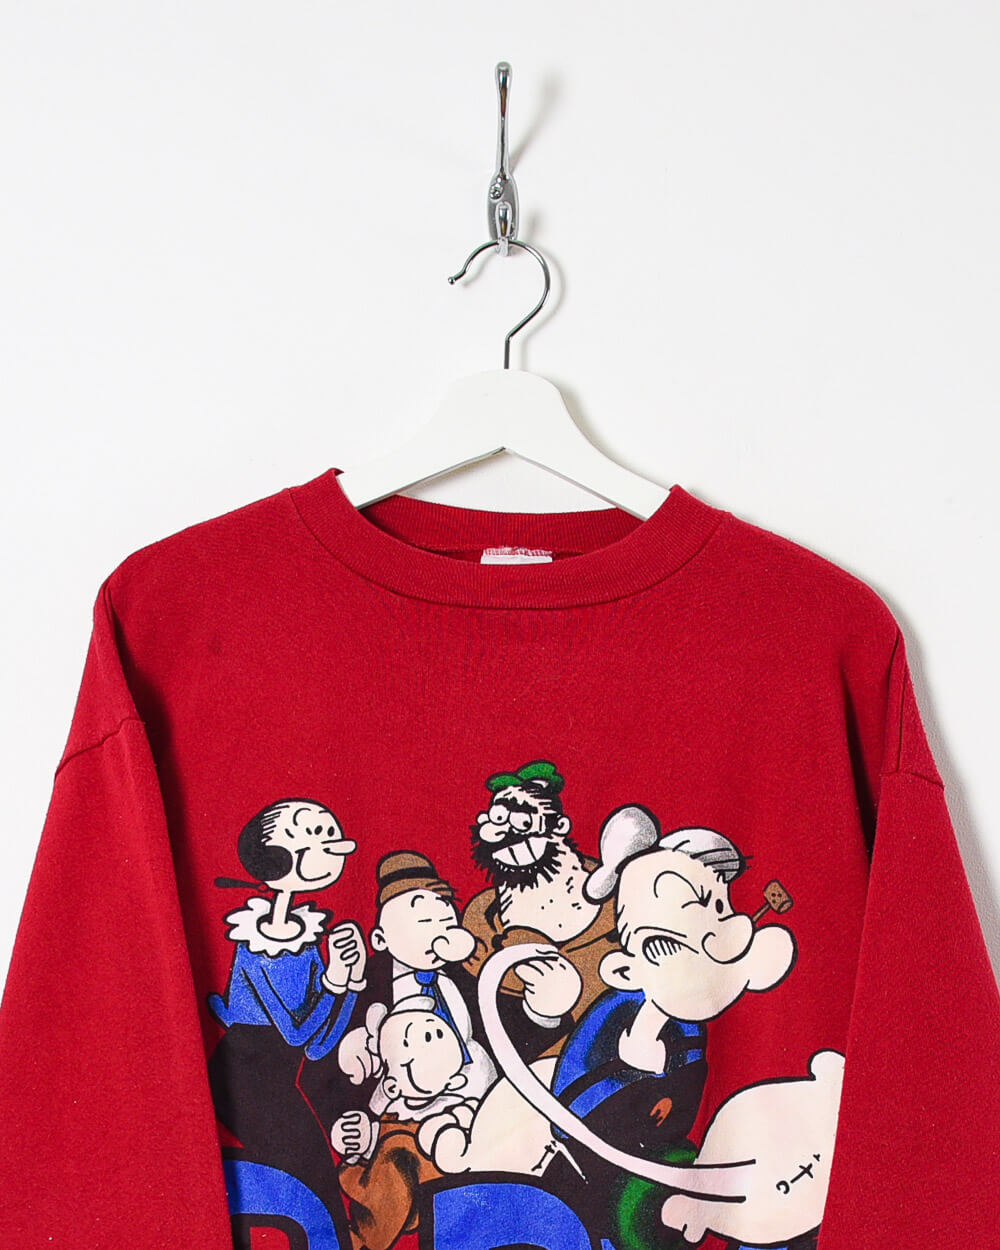 Popeye Sweatshirt -Small - Domno Vintage 90s, 80s, 00s Retro and Vintage Clothing 